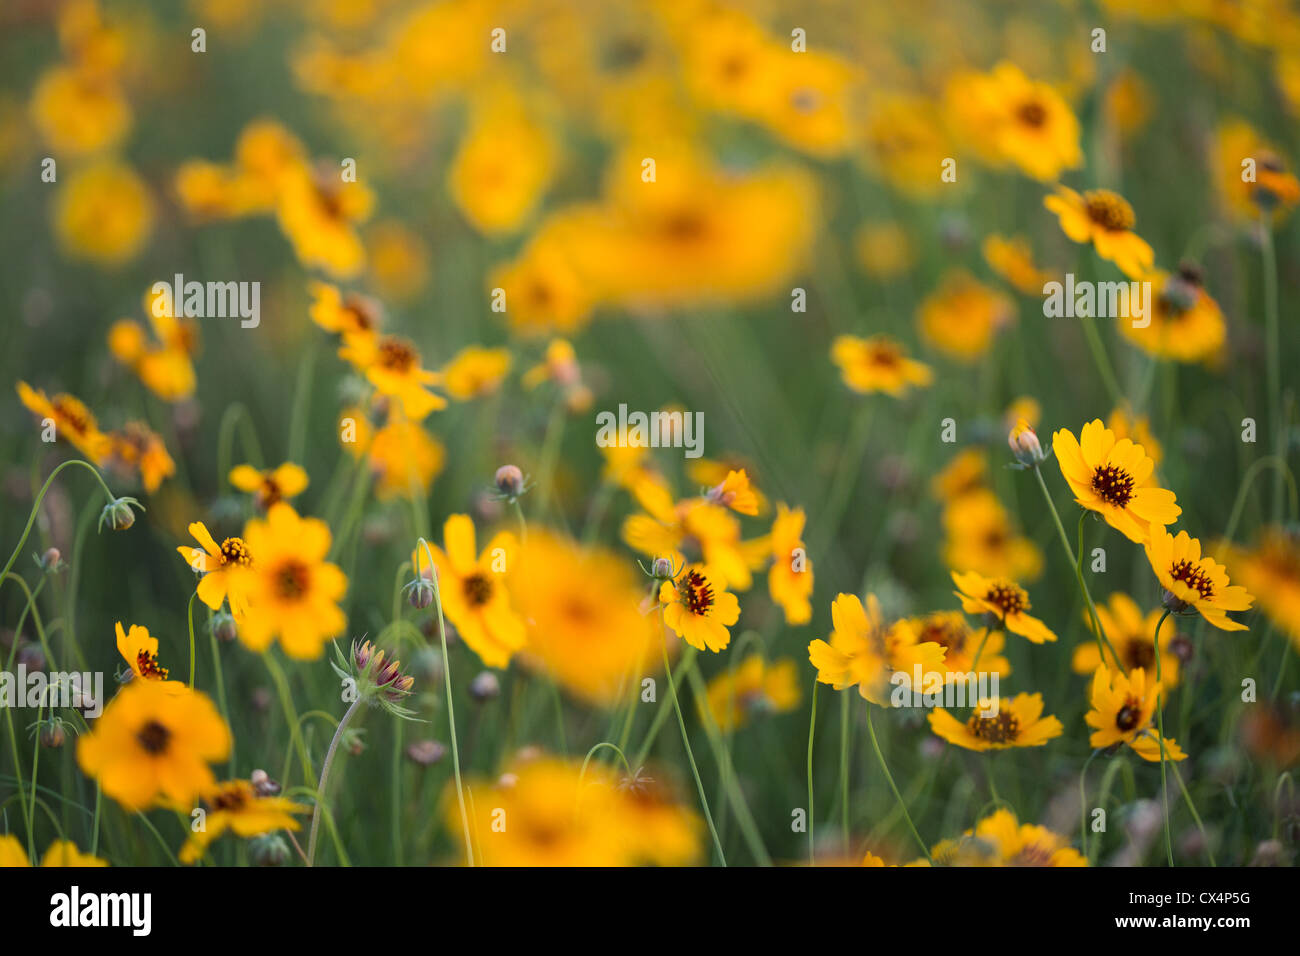 A dreamy image of a field full of yellow Texas wildflowers - Thelesperma filifolium AKA Greenthread Stock Photo